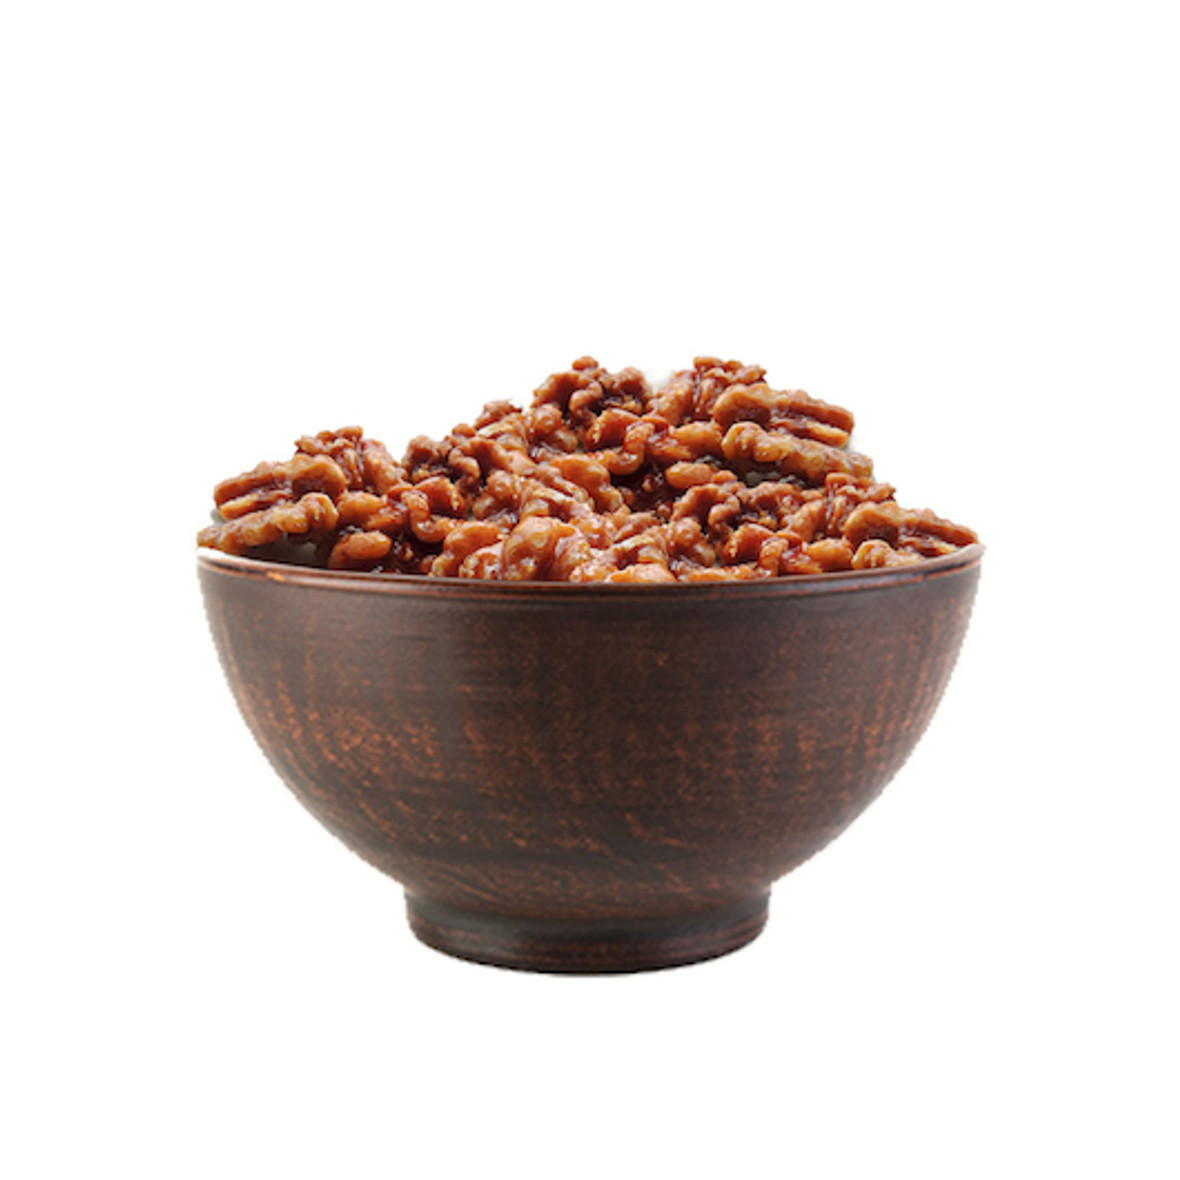 Azar Honey Maple Walnuts, 5 Pounds, 2 Per Case